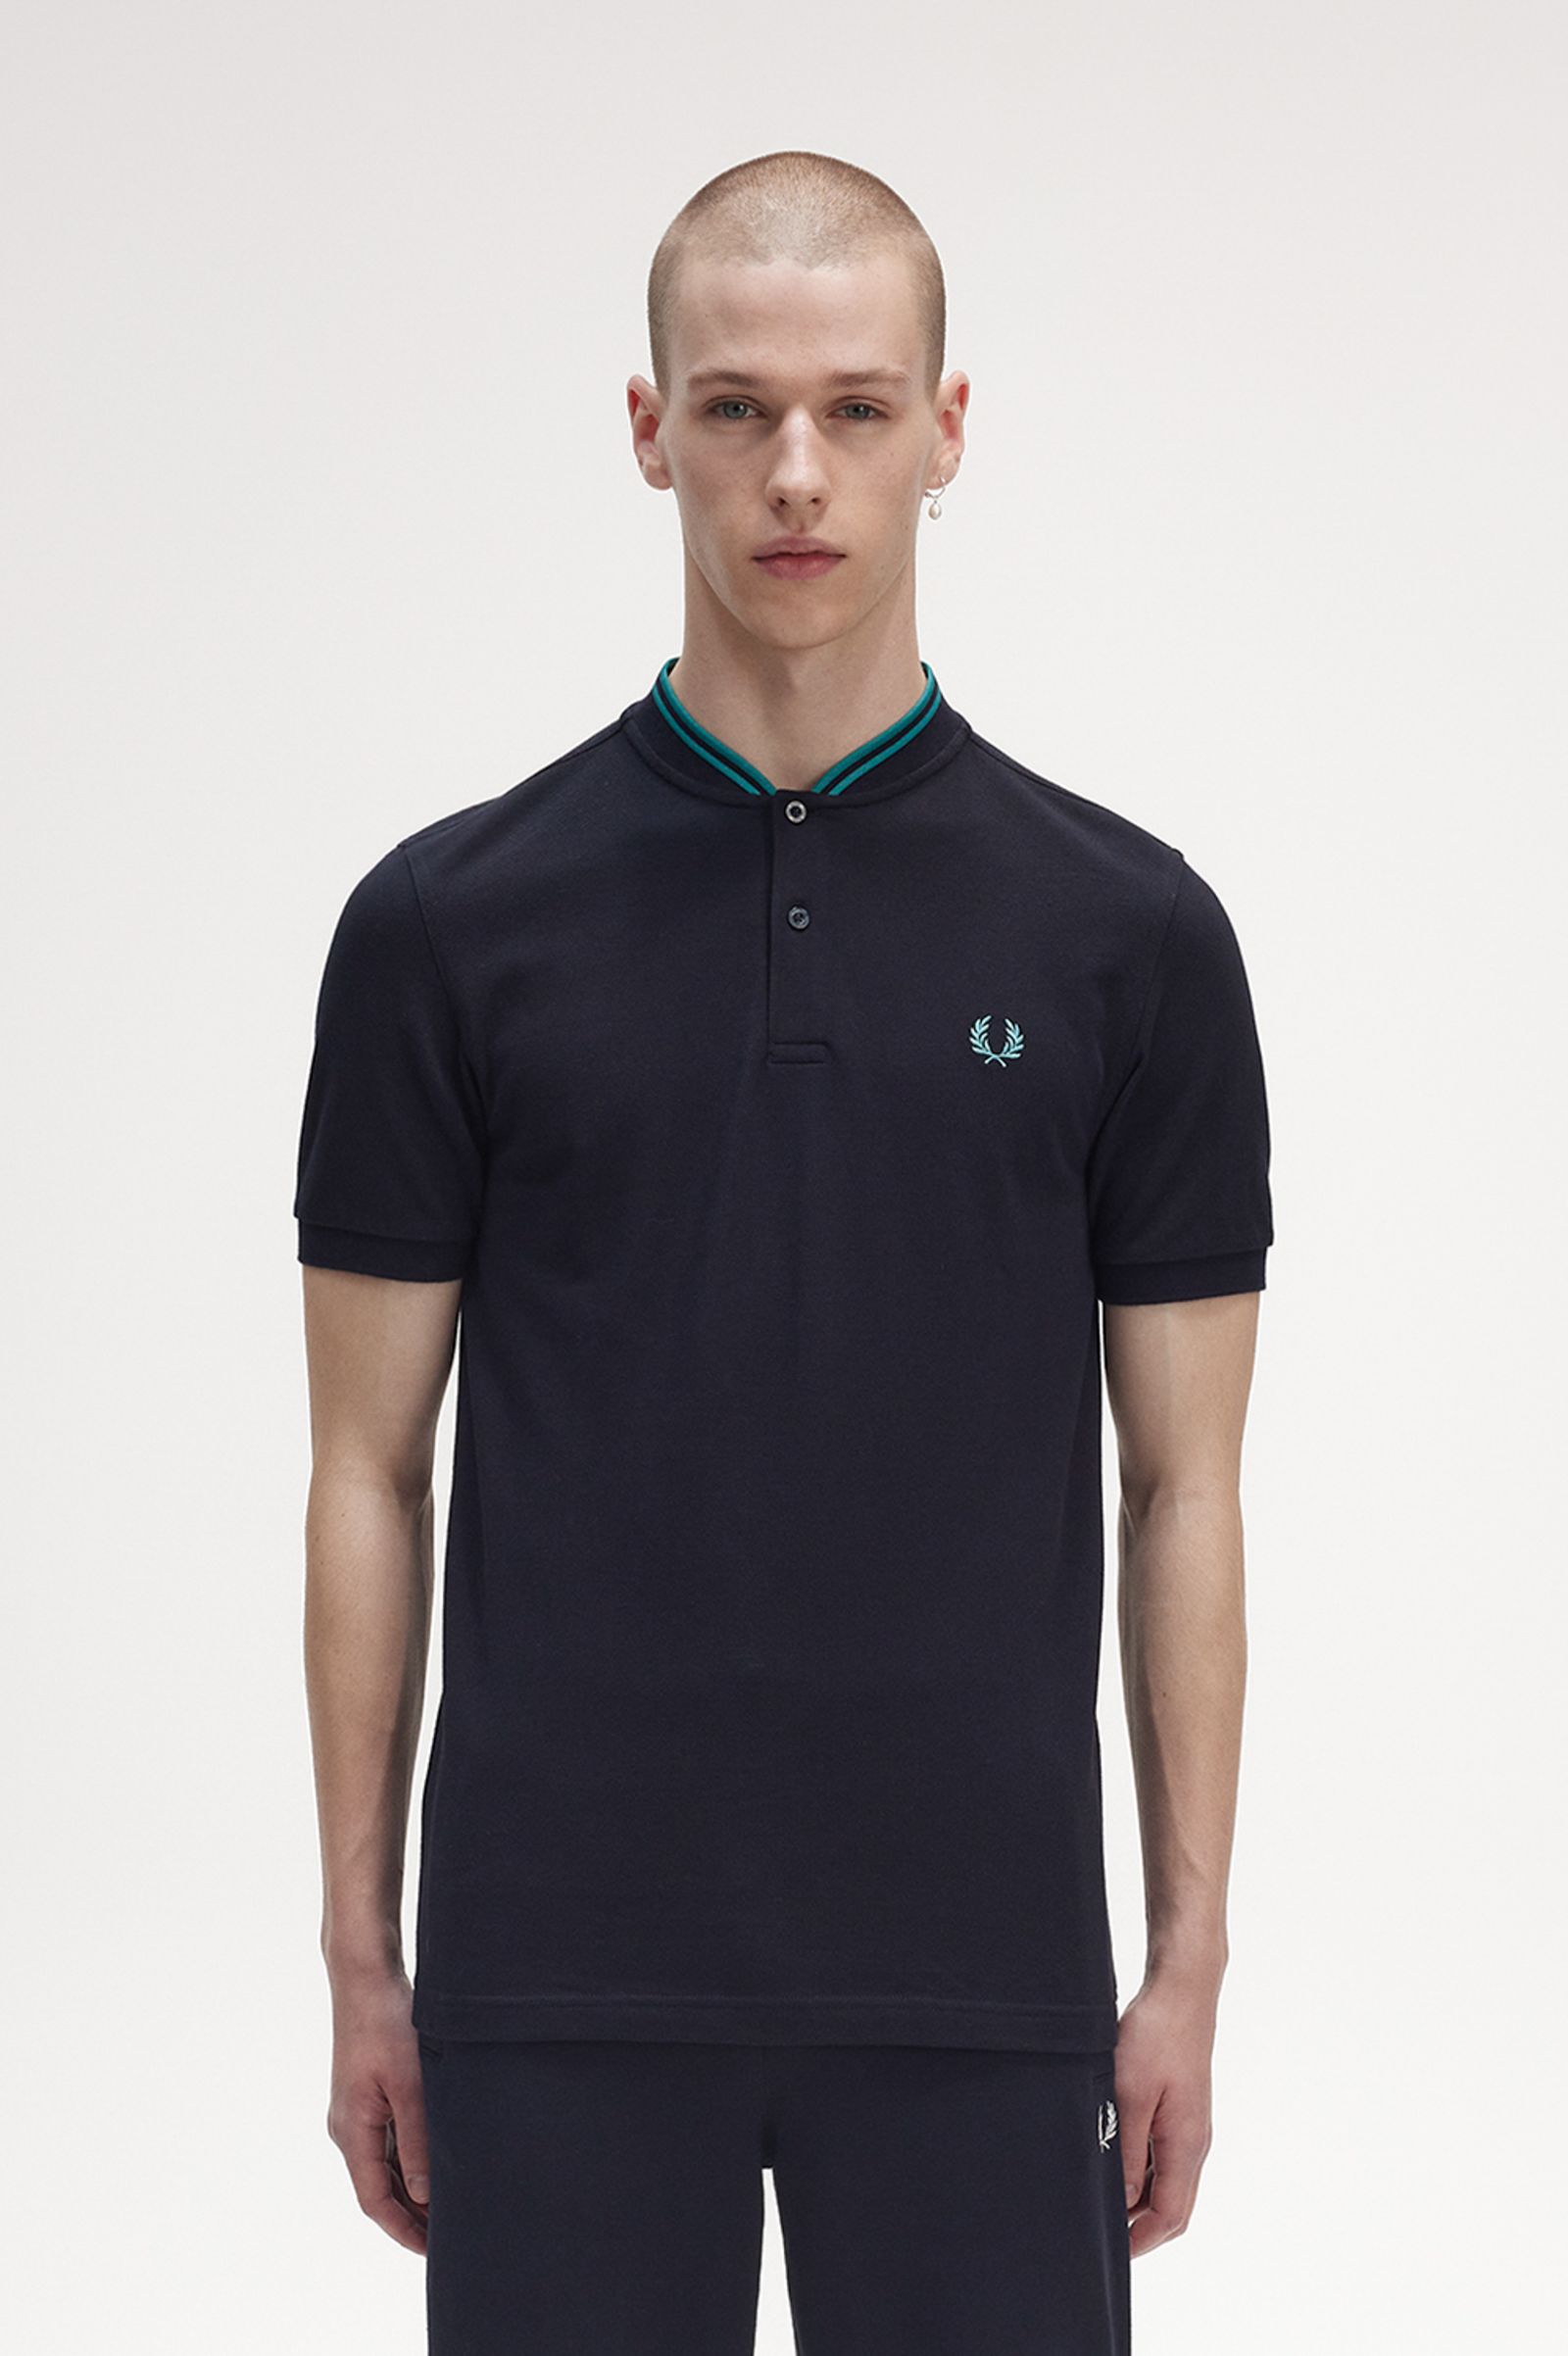 Bomber Collar Polo Shirt - Navy / Deep Mint | Men's Polo Shirts | Short ...